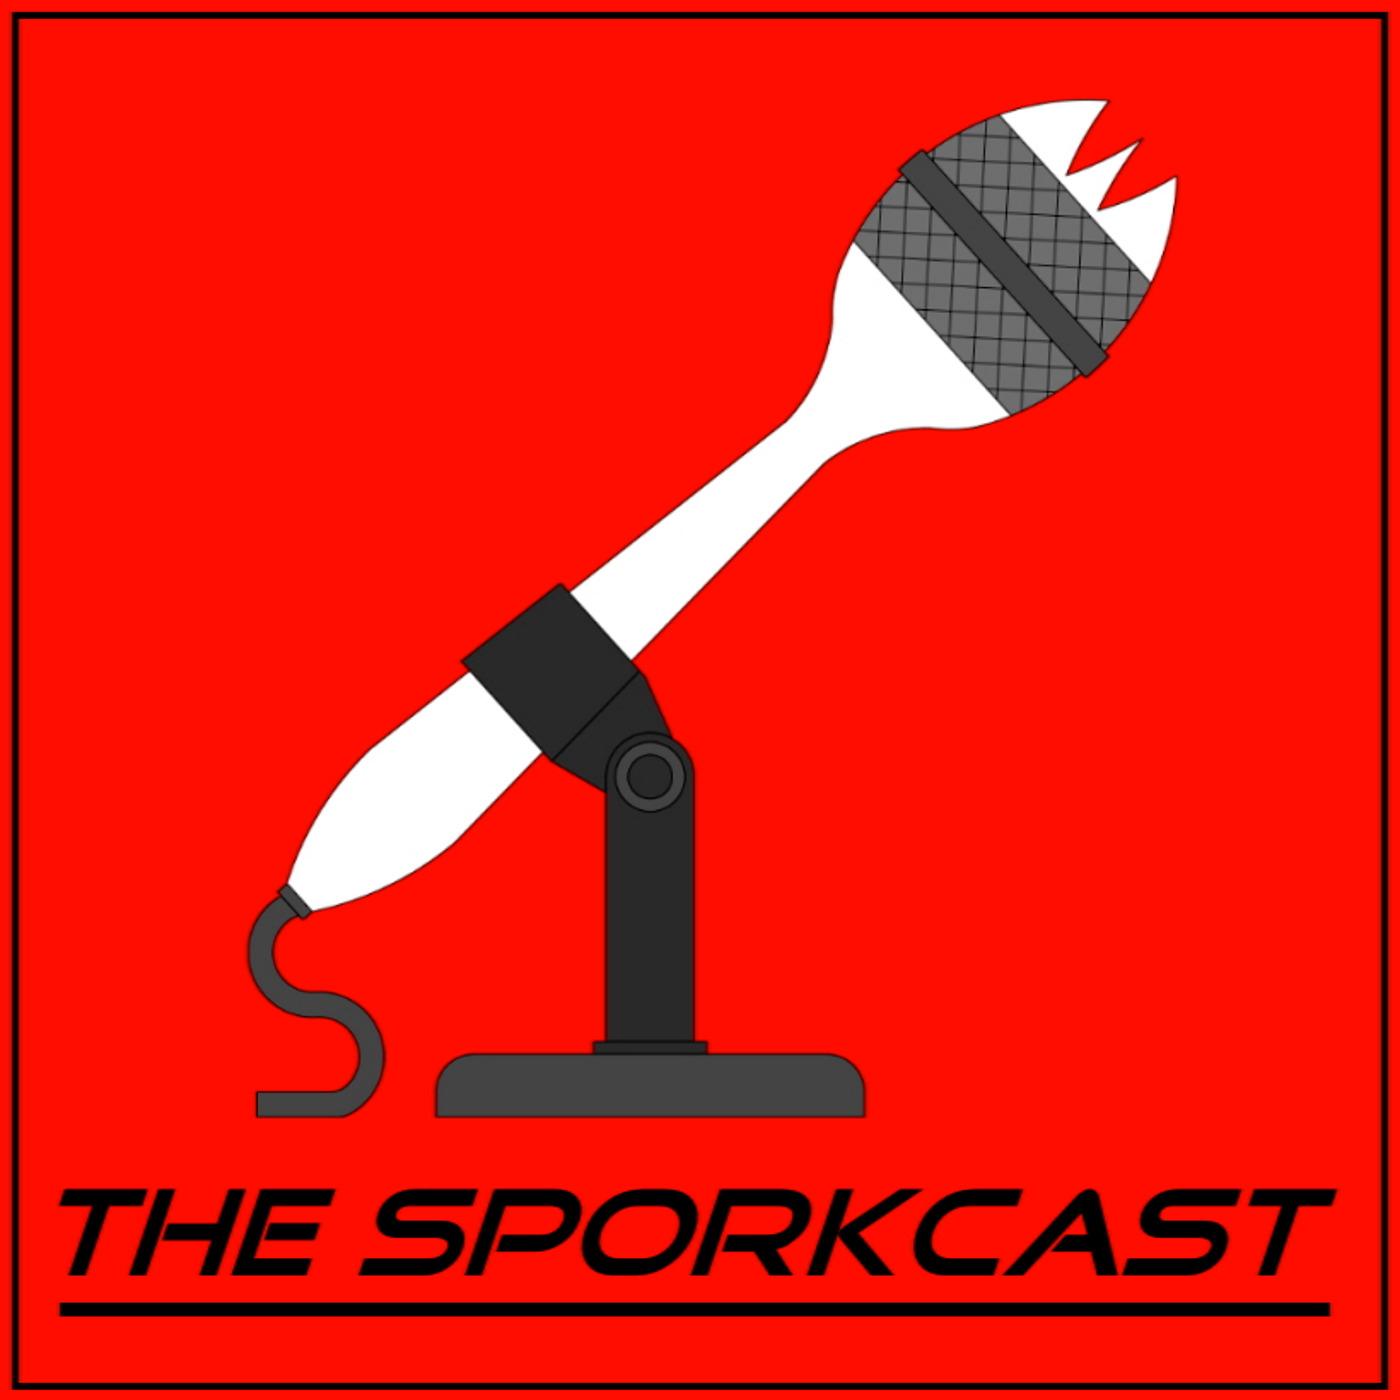 The Sporkcast